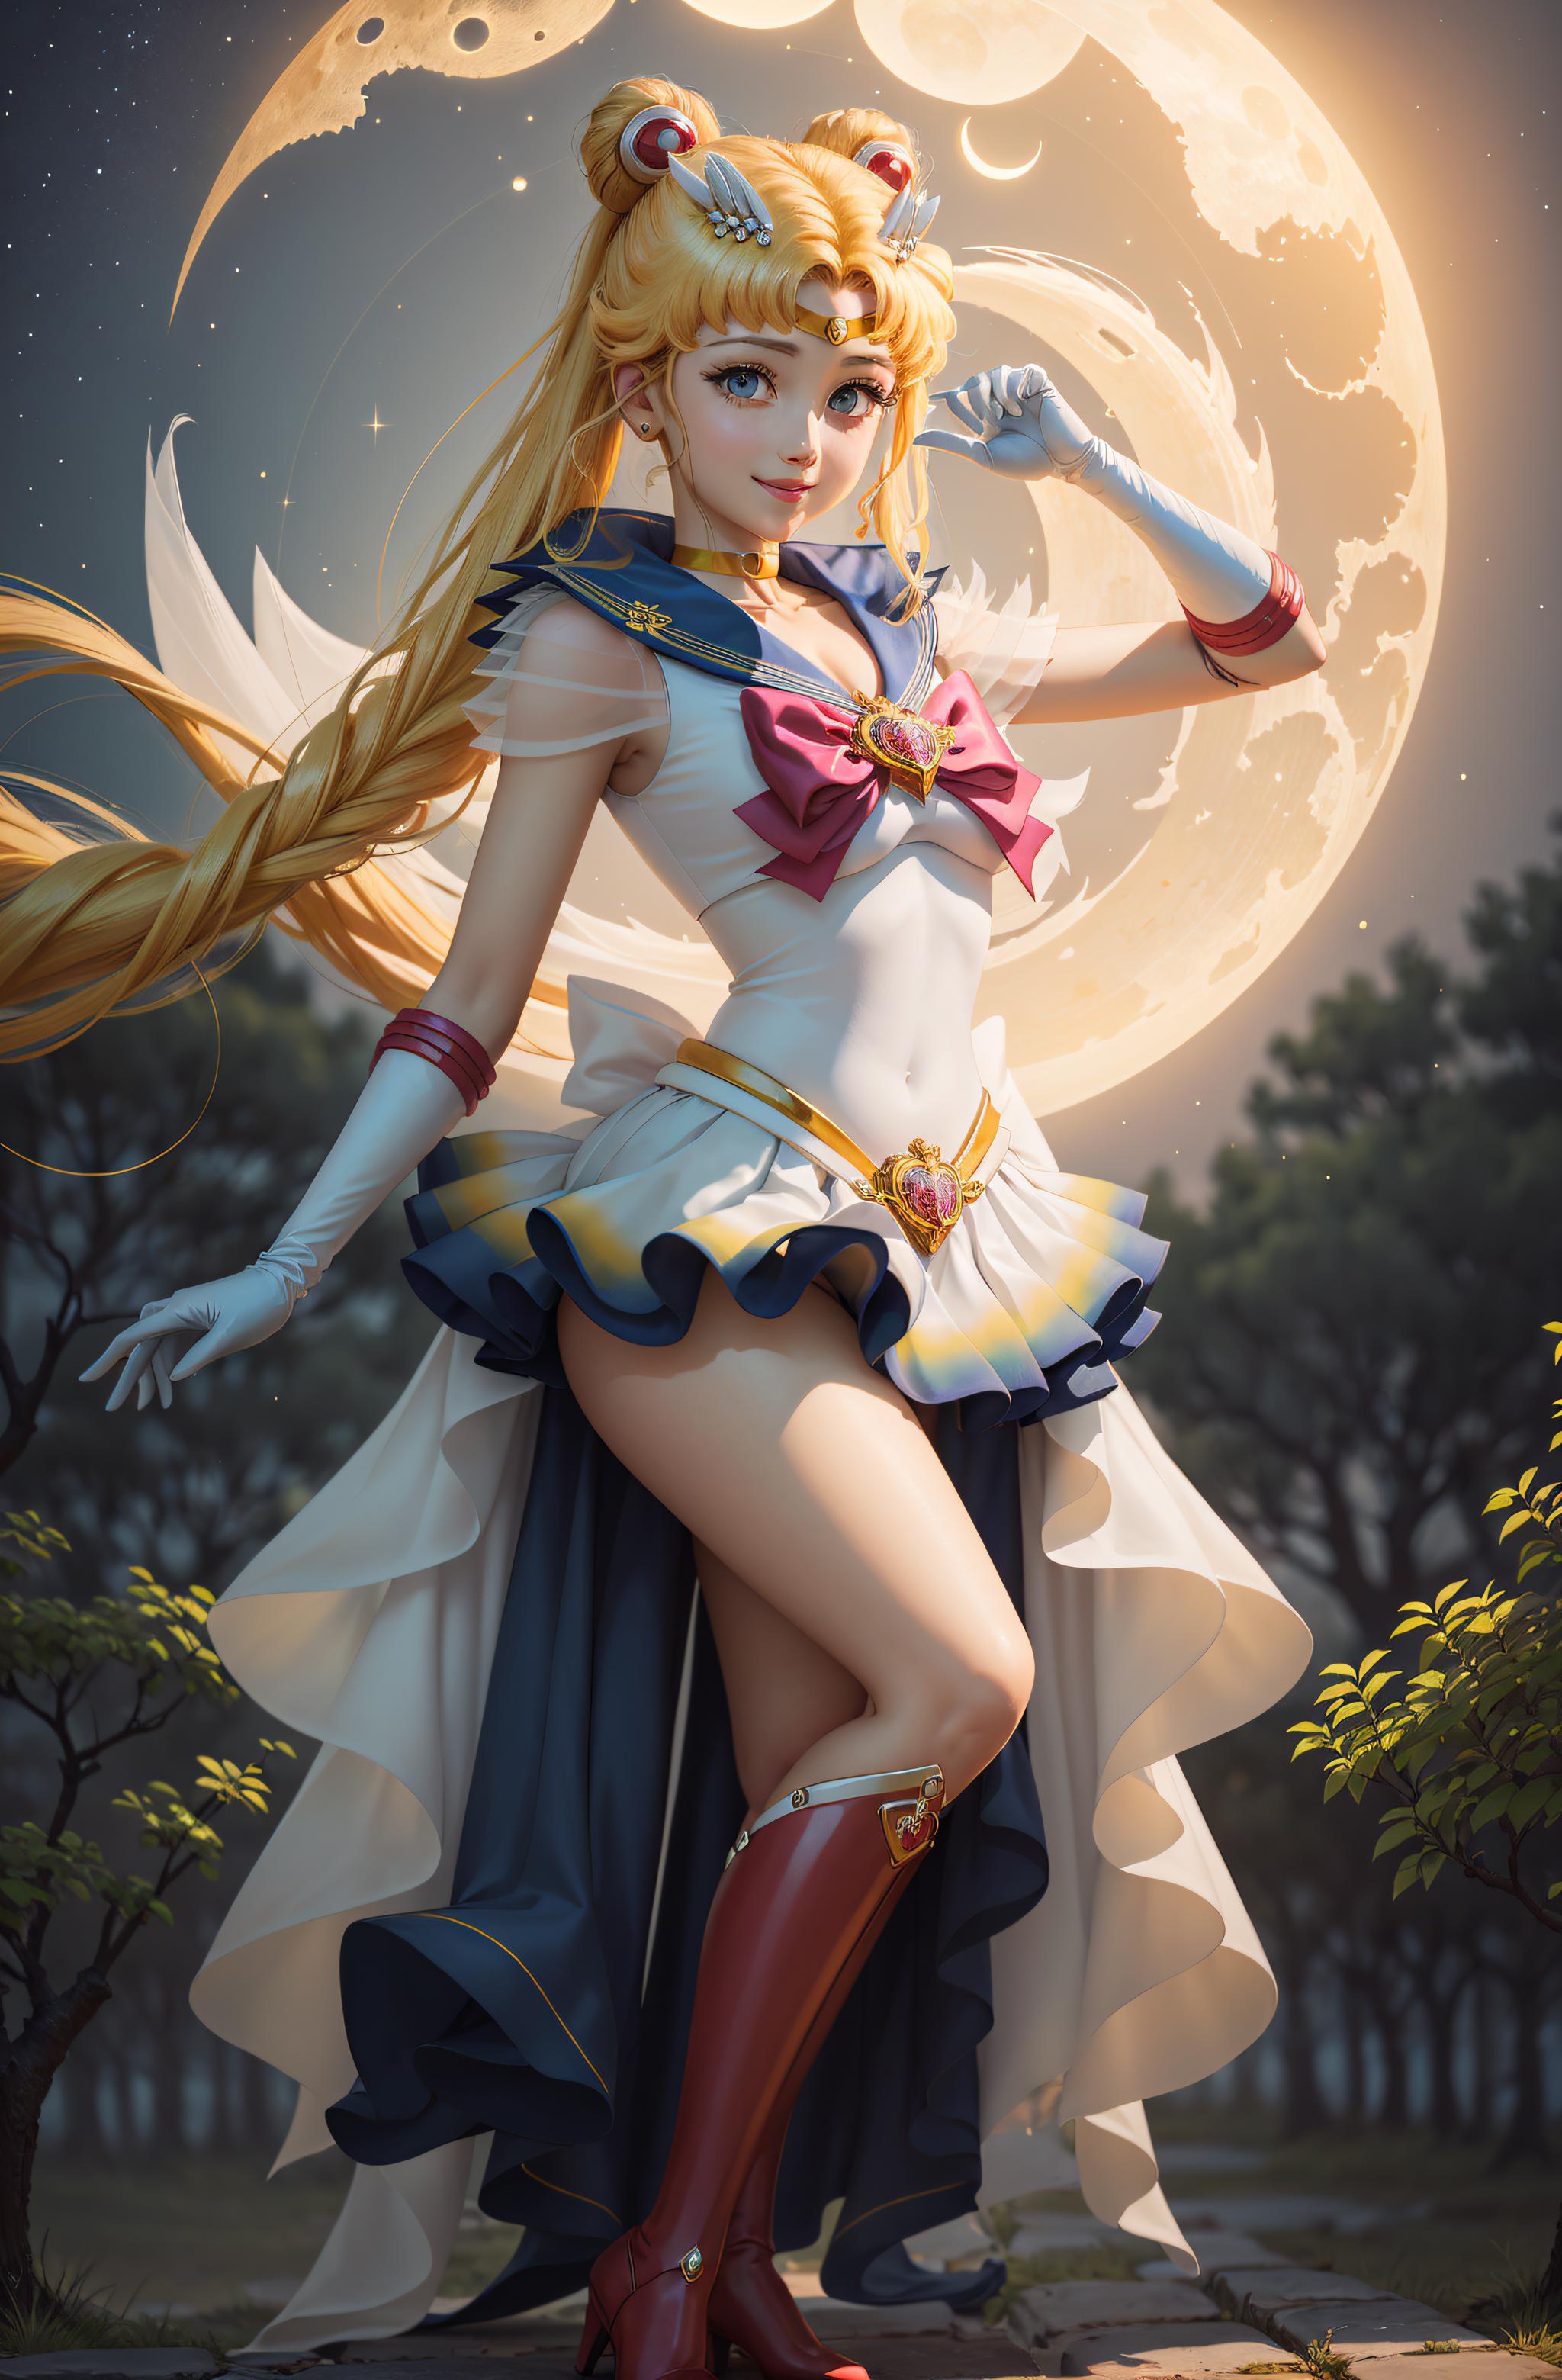 Super Sailor Moon LoRa image by DarkMaster13